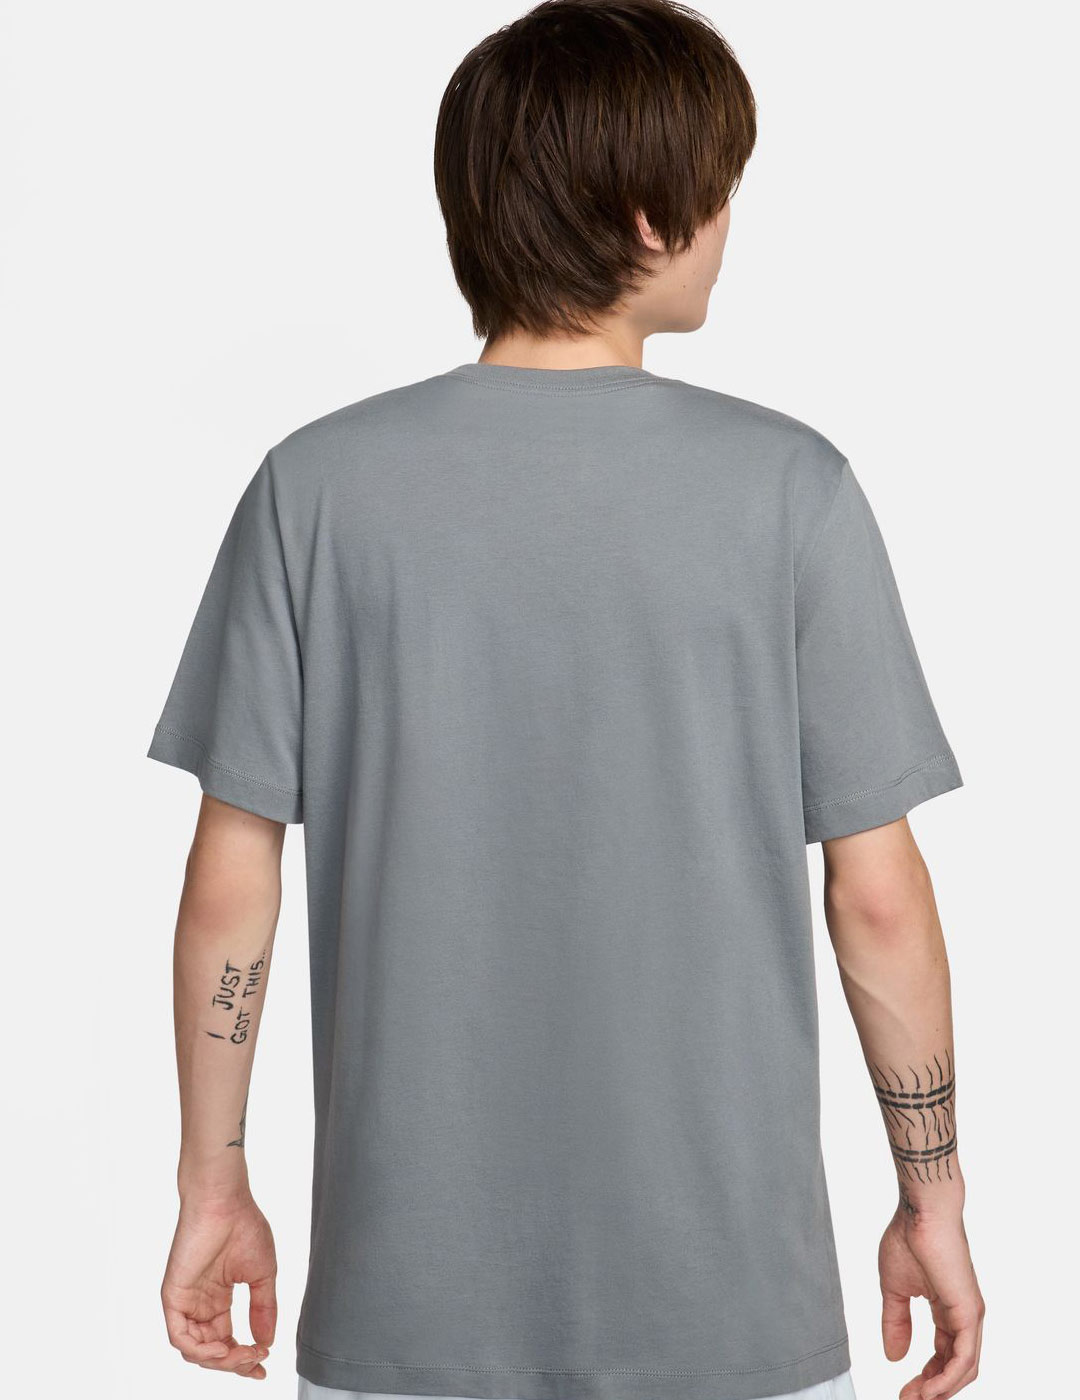 camiseta hombre nike manga corta SPORTSWEAR, gris